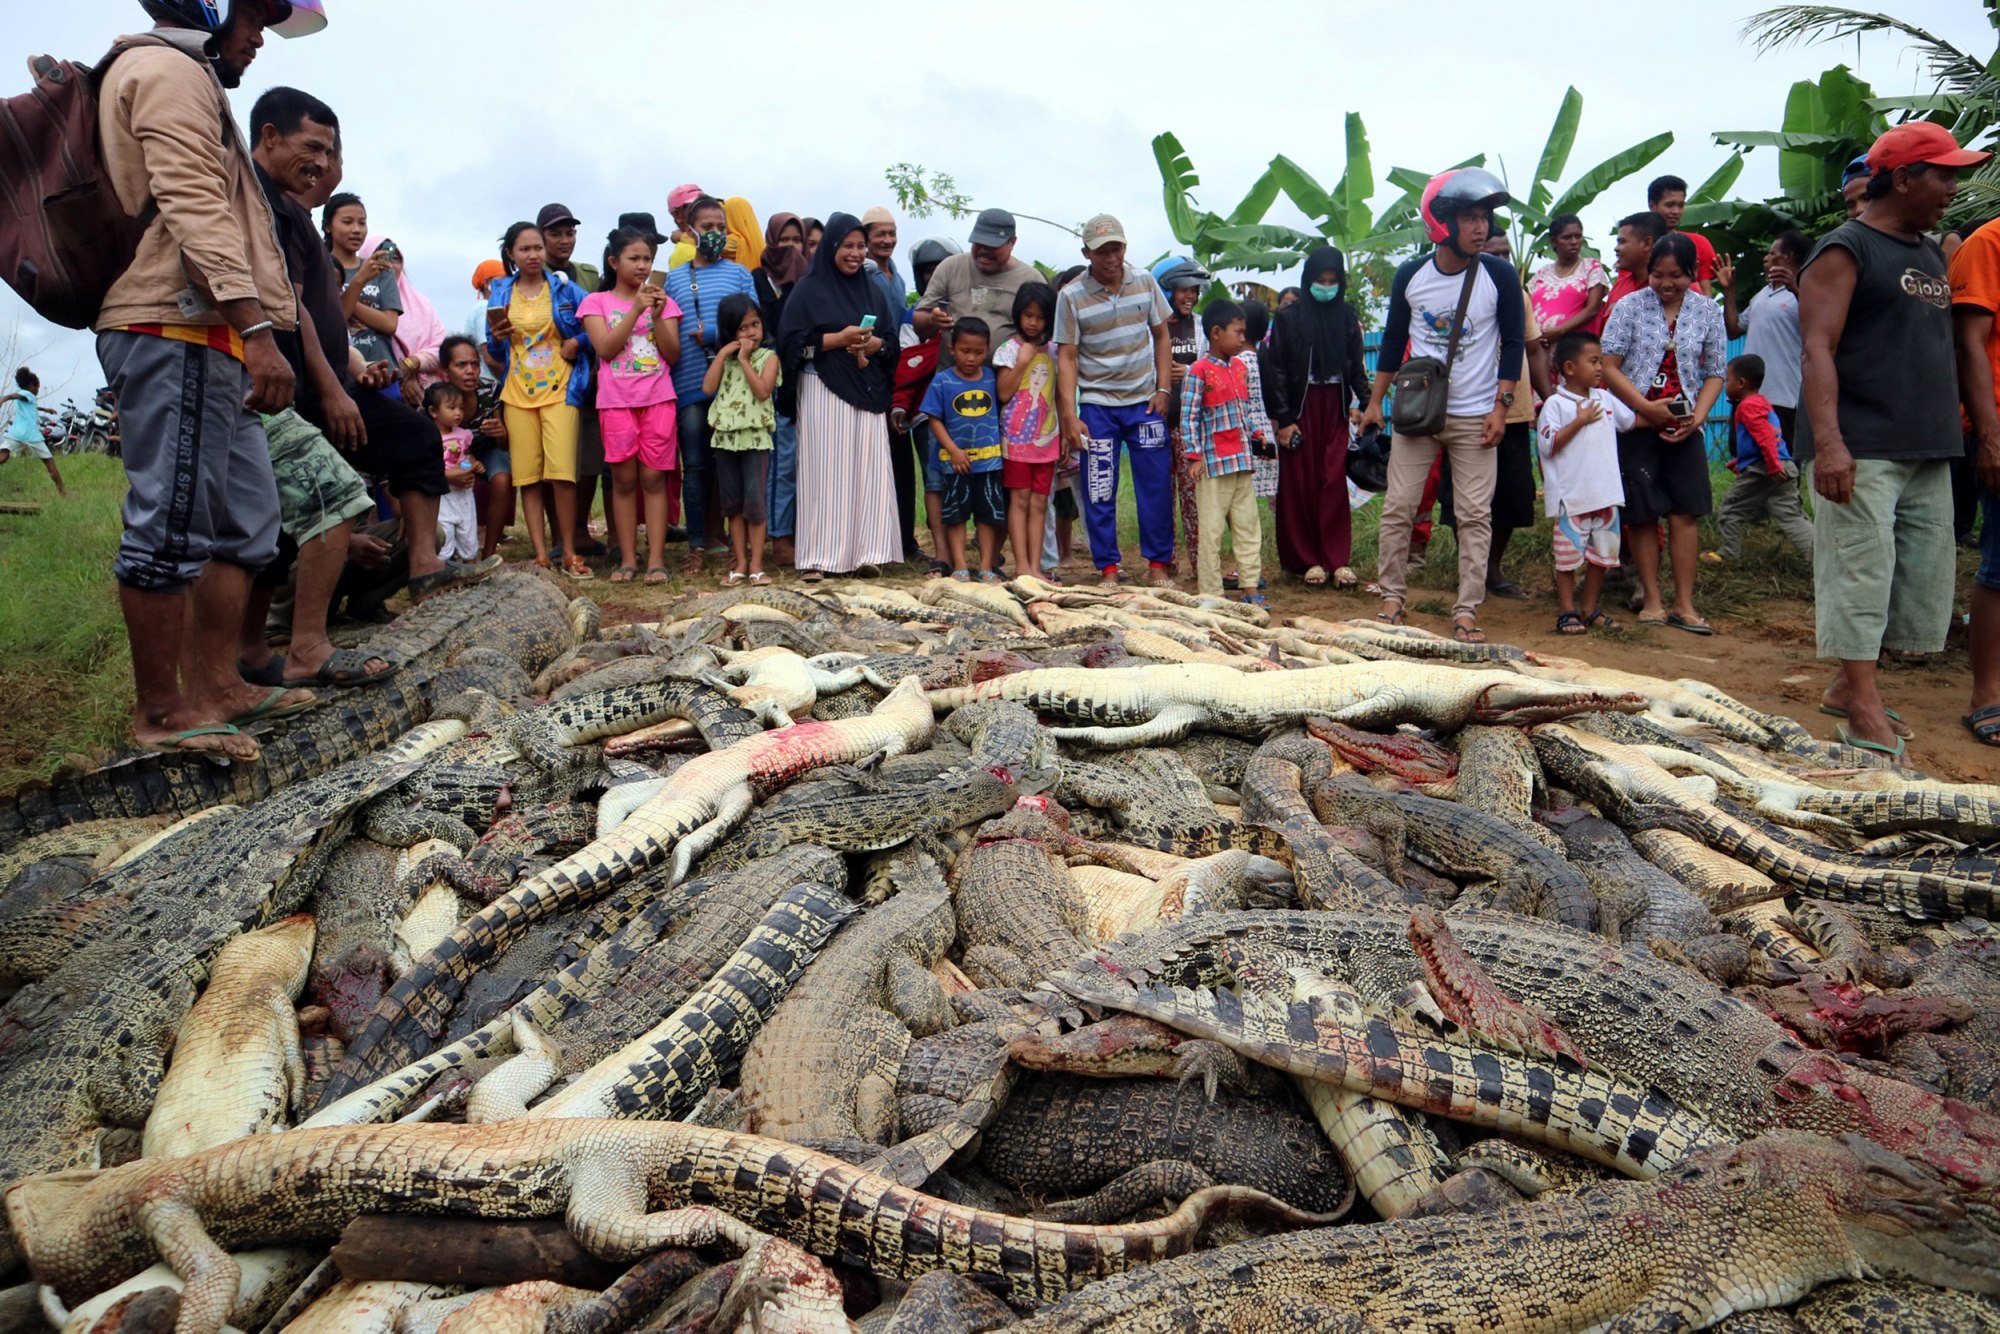 180716-indonesia-slaughtered-crocodiles-3-se-1158p_42c4da33036bf9ead4b36d0c3ebc012f.fit-2000w.jpg